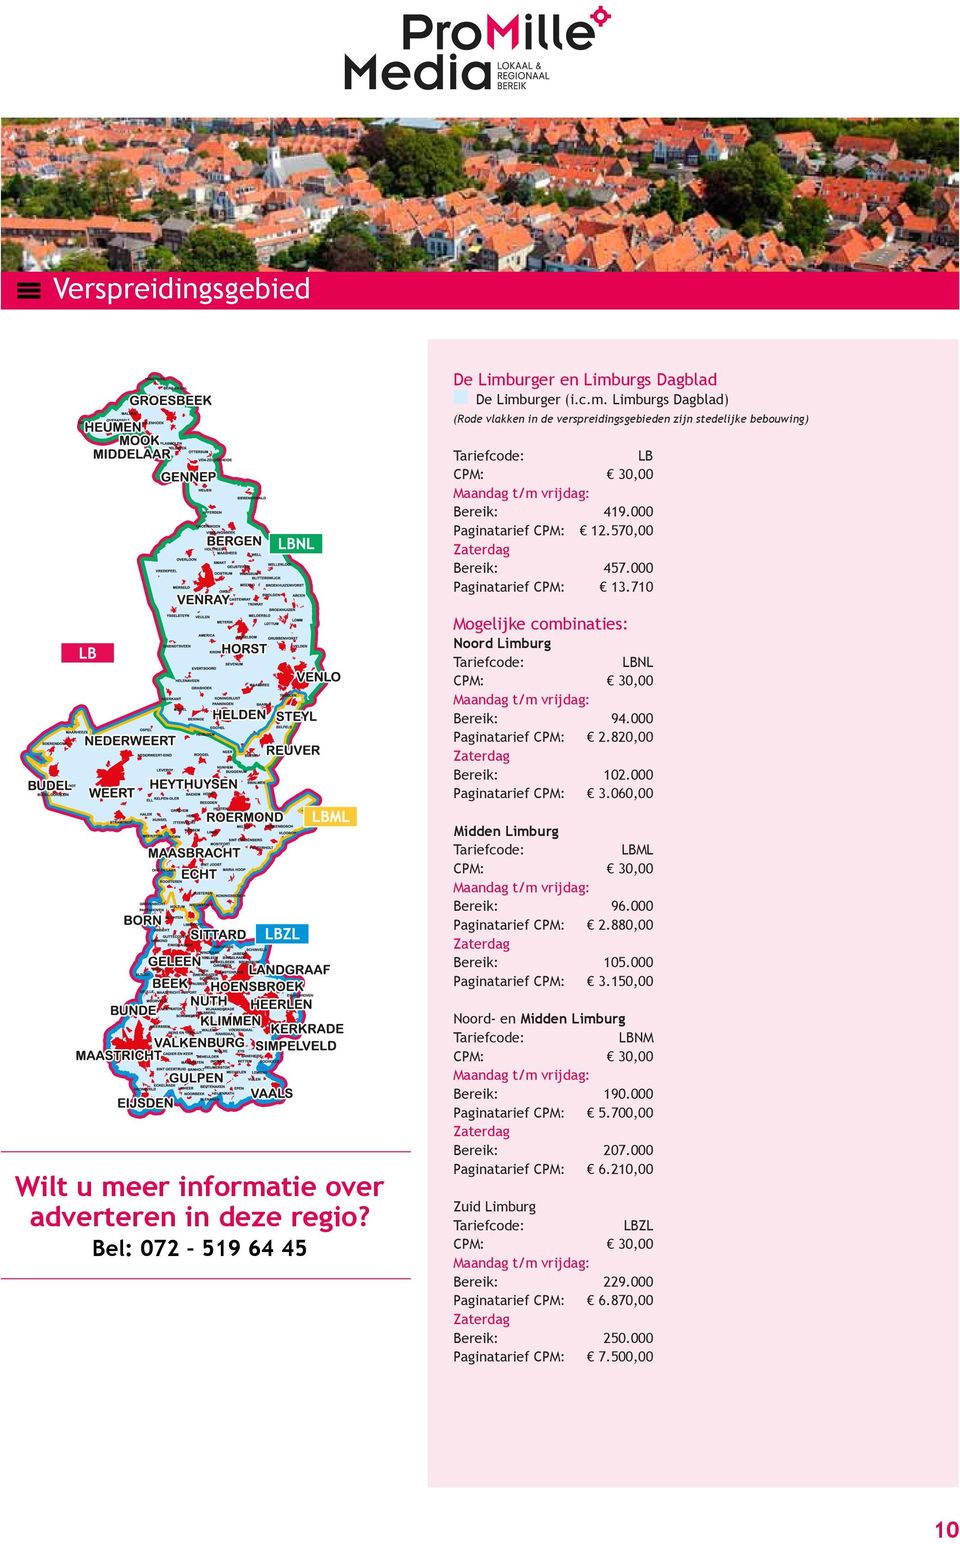 060,00 Midden Limburg LBML Bereik: 96.000 Paginatarief 2.880,00 Bereik: 105.000 Paginatarief 3.150,00 Noord- en Midden Limburg LBNM Bereik: 190.